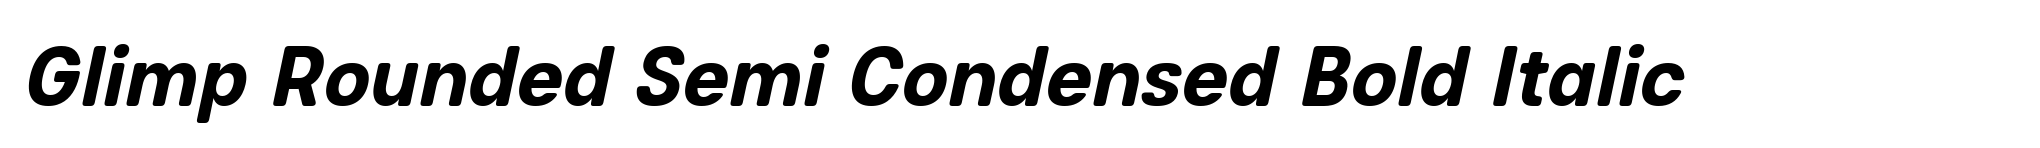 Glimp Rounded Semi Condensed Bold Italic image